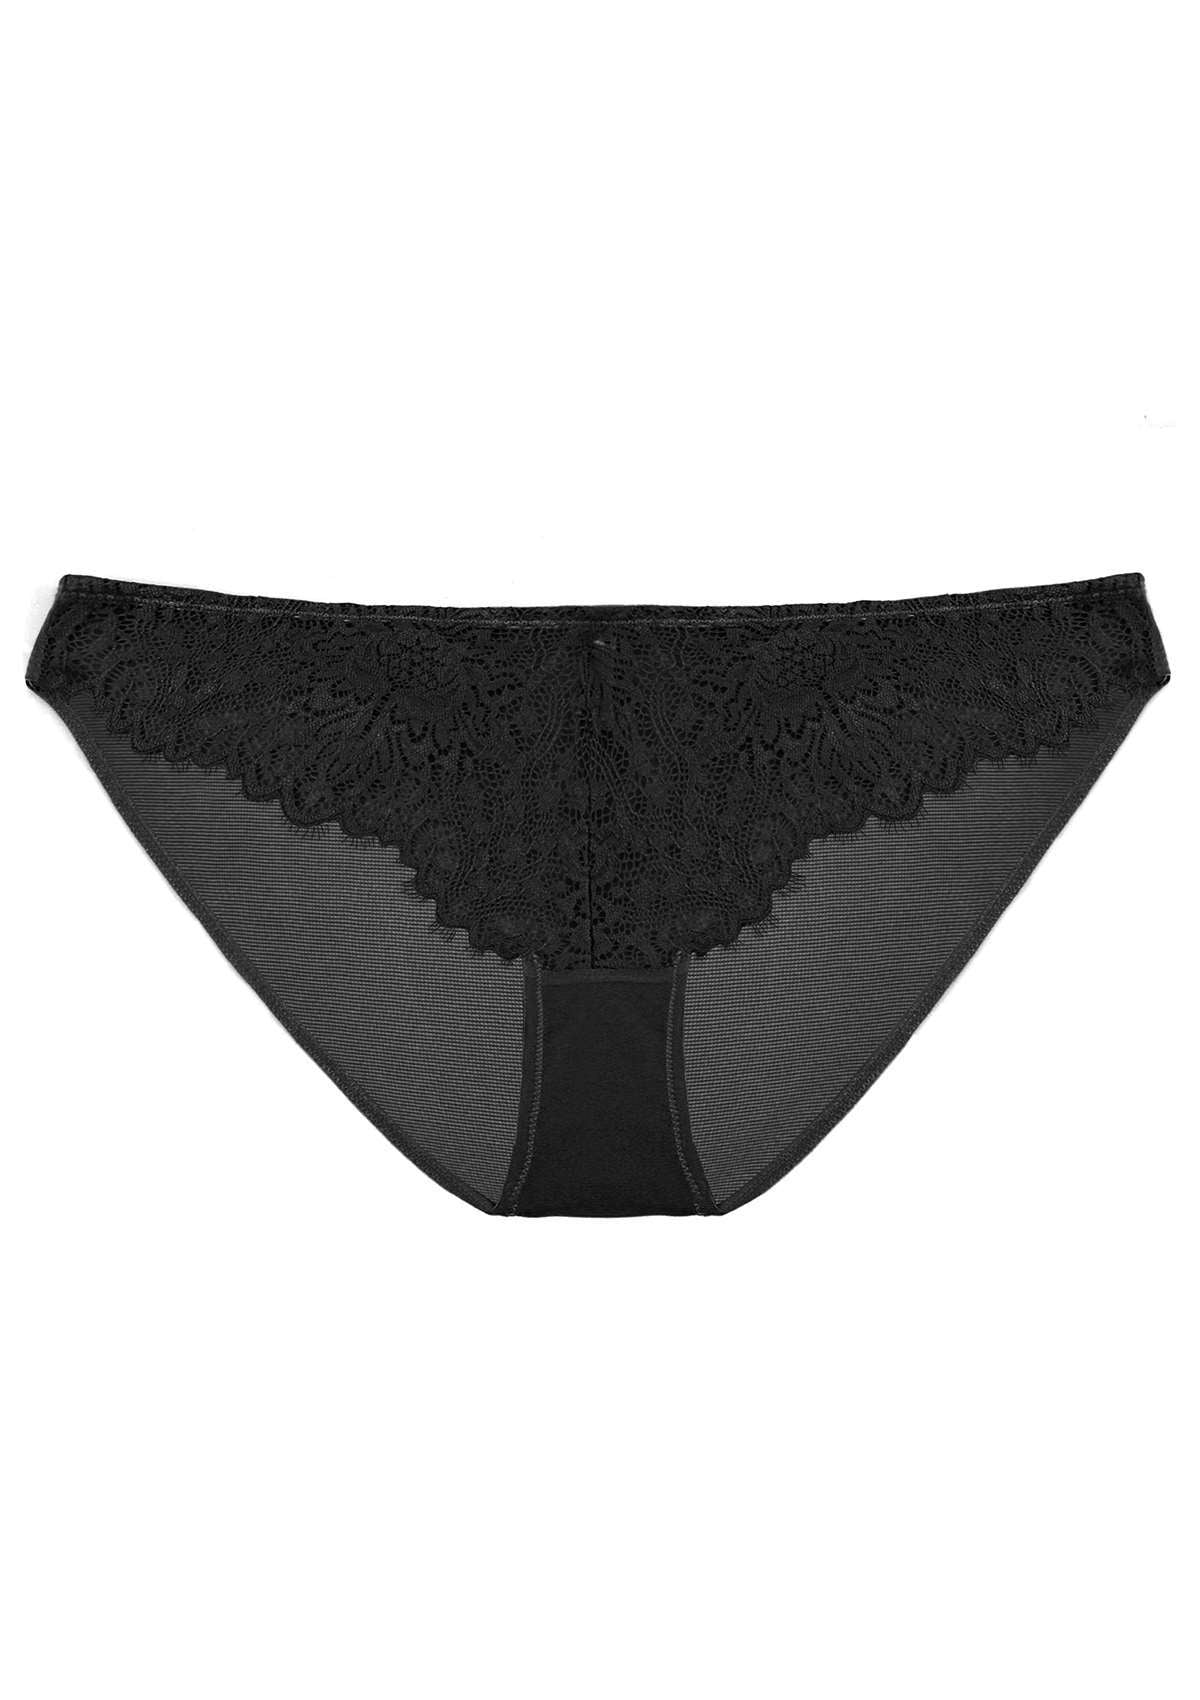 HSIA Sunflower Exquisite Black Bikini Lace Underwear - M / High-Rise Brief / Black